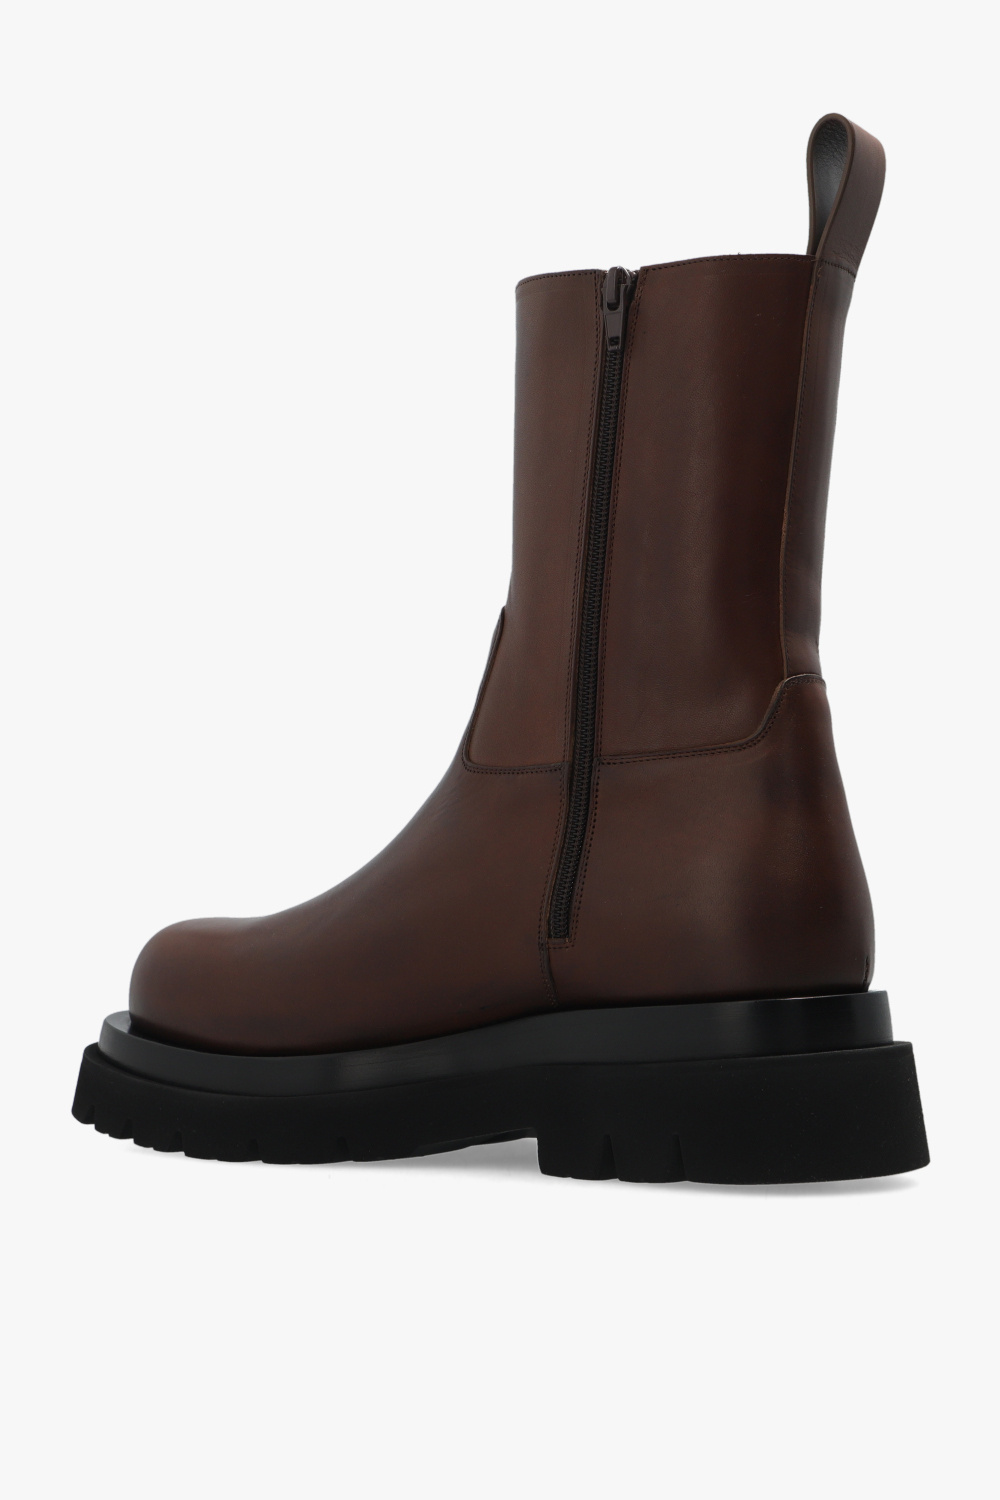 bottega short Veneta ‘Lug’ ankle boots